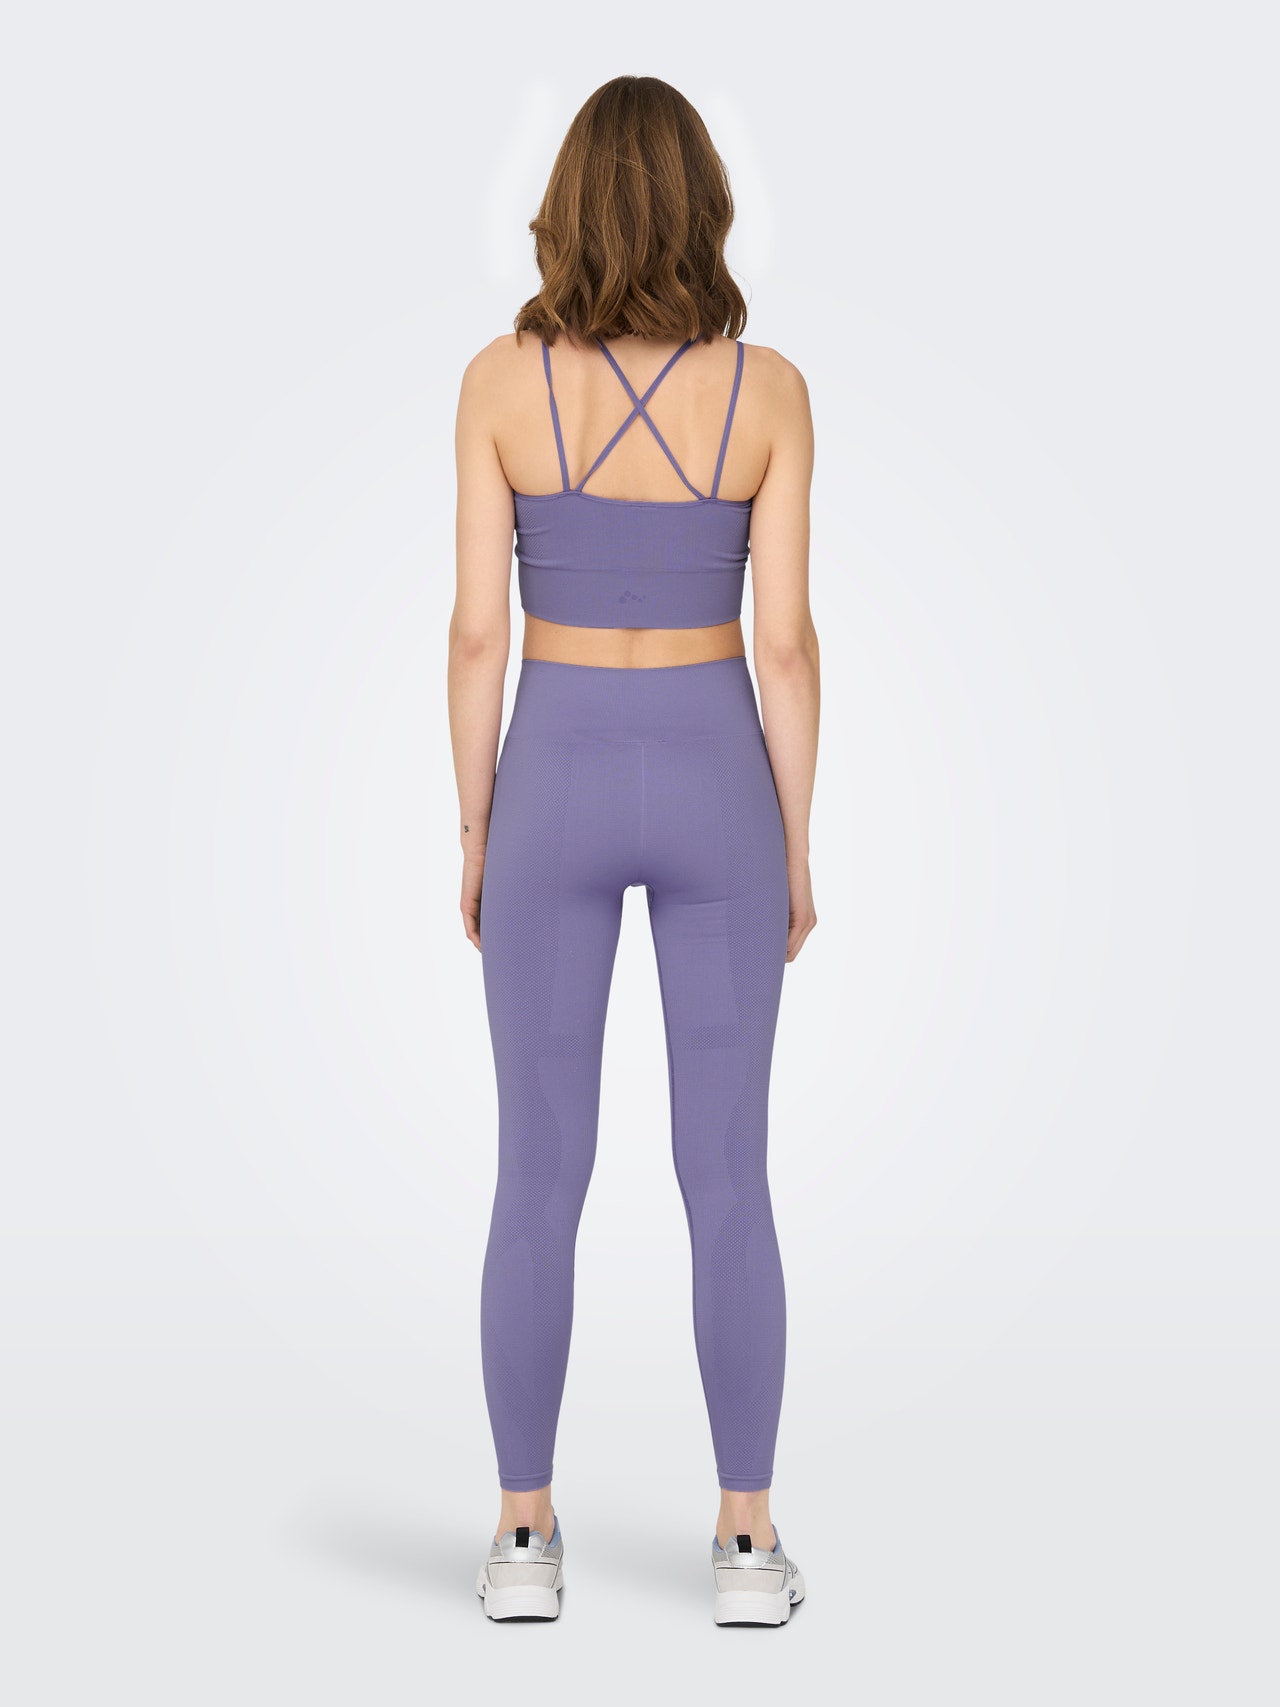 ONLY Slim fit High waist Legging -Aster Purple - 15280593